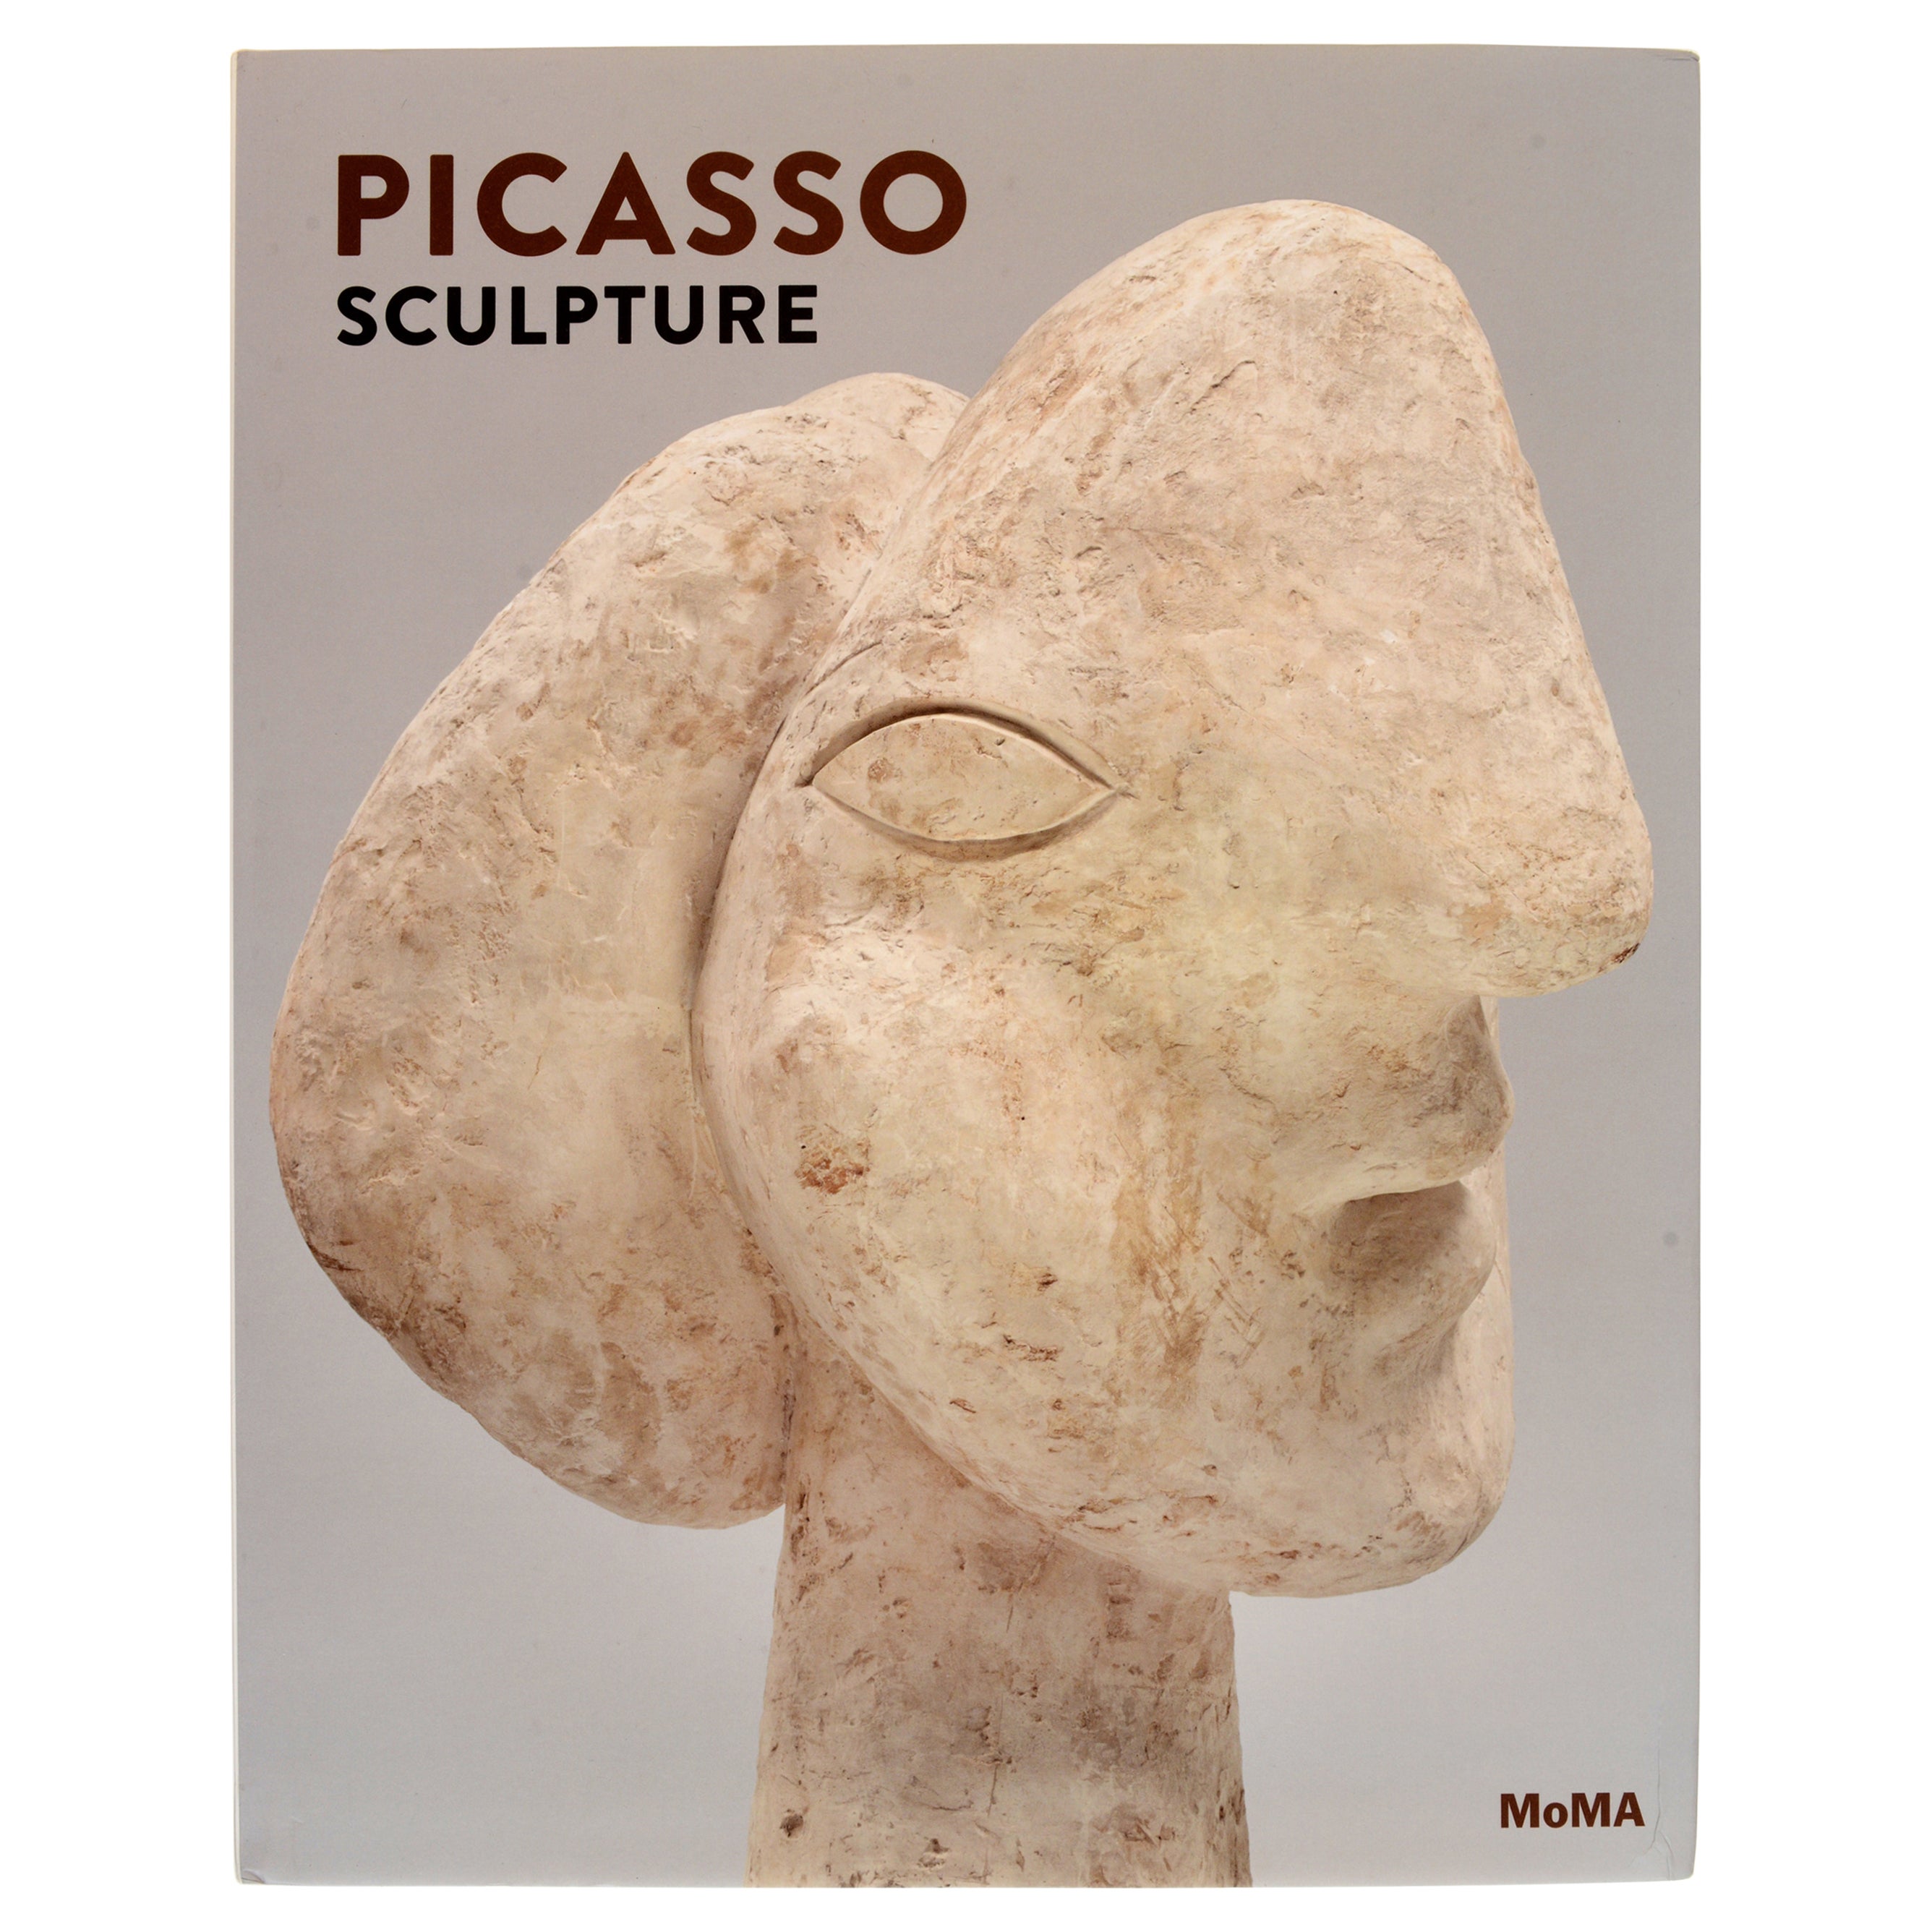 Picasso Picasso-Skulptur von Luise Mahler, Virginie Perdrisot & Rebecca Lowery, 1st Ed